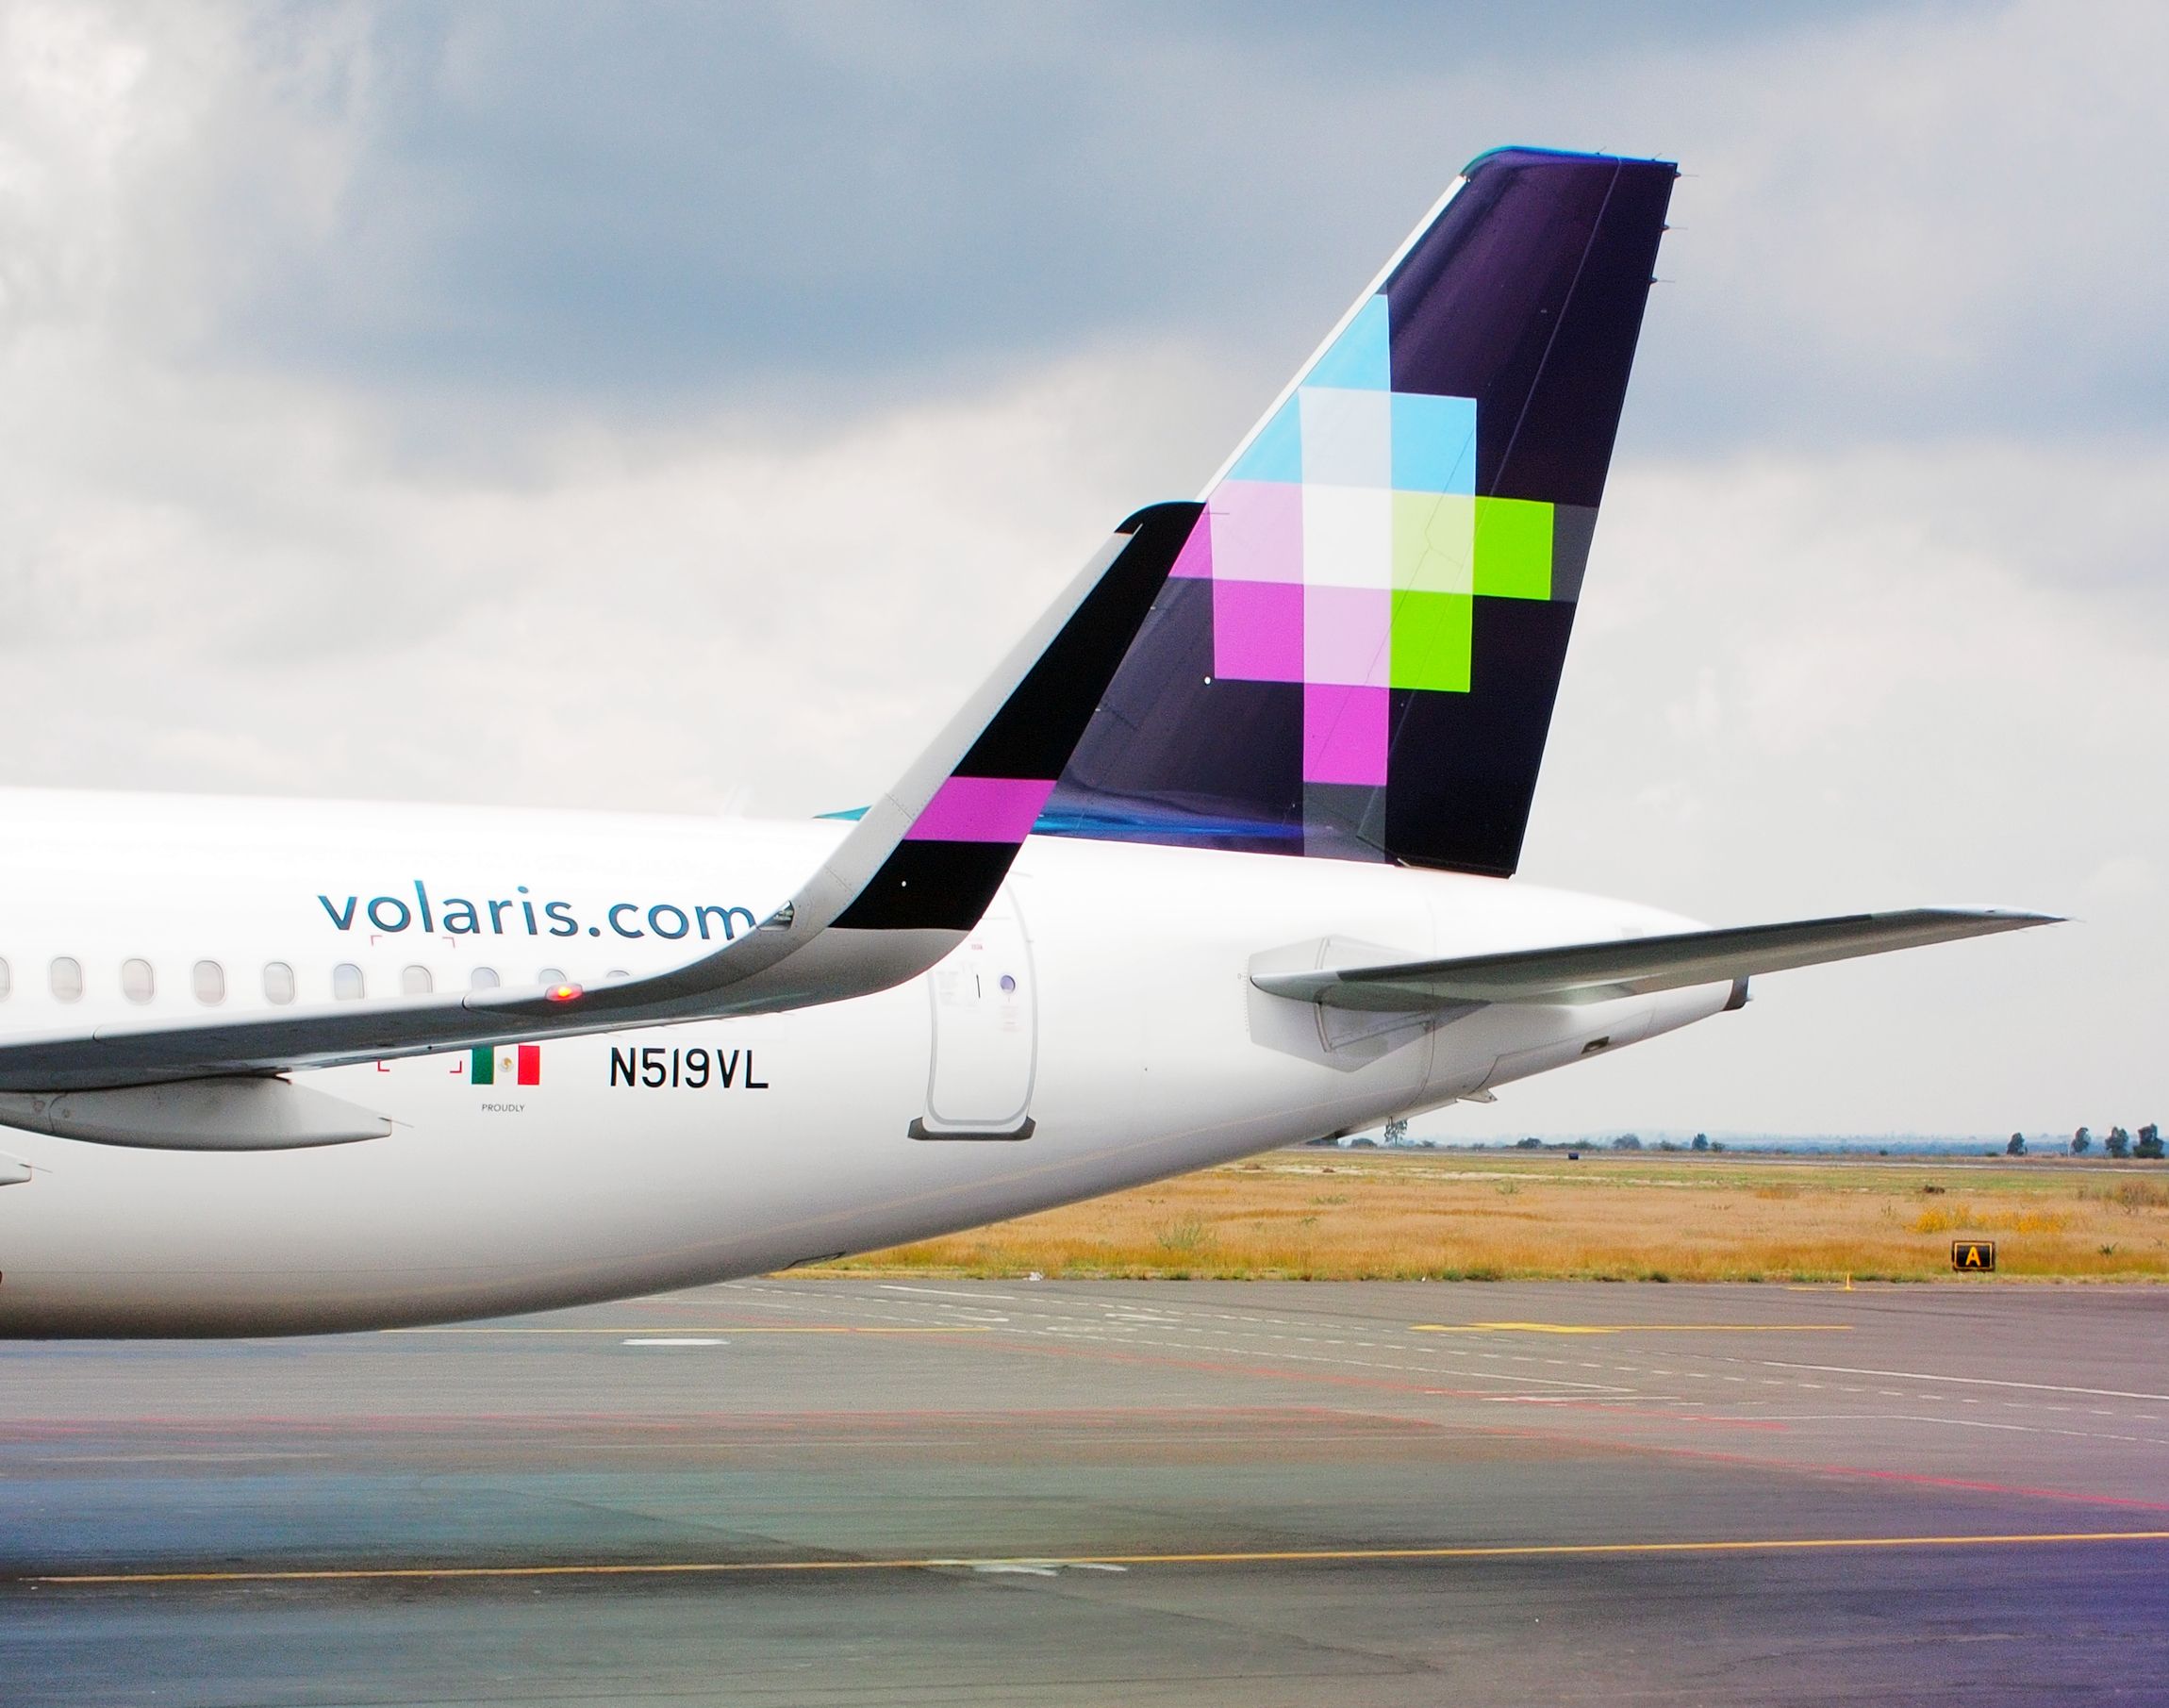 Volaris aircraft tail and sharklet. 